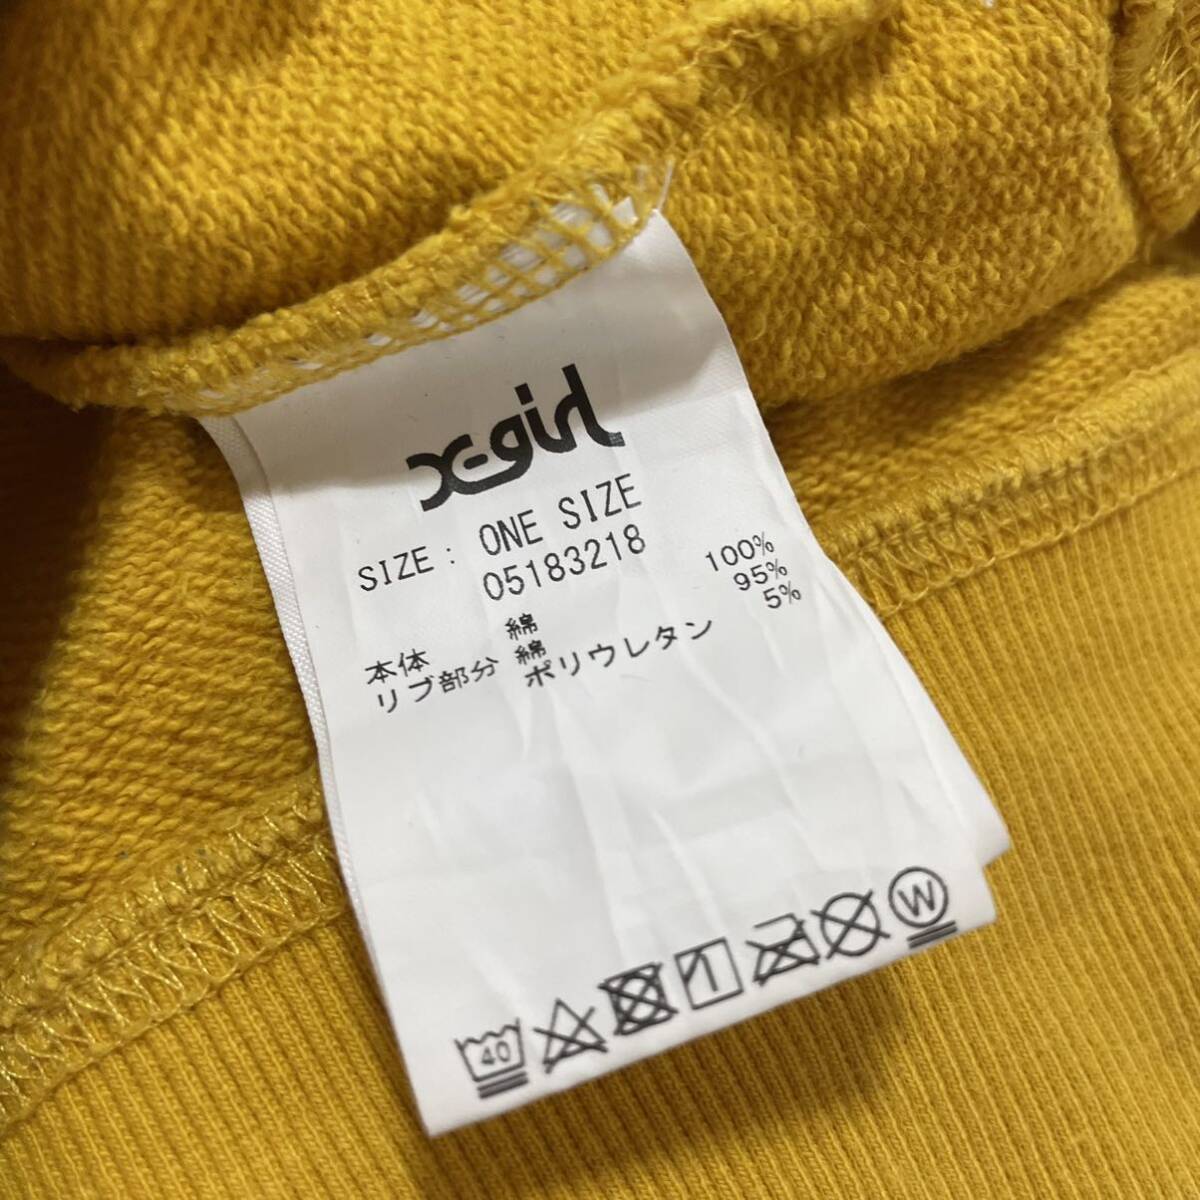 Xgirl X-girl sweat тренировочный футболка вышивка Logo большой Silhouette ..dabo женский желтый размер F шар FL3455